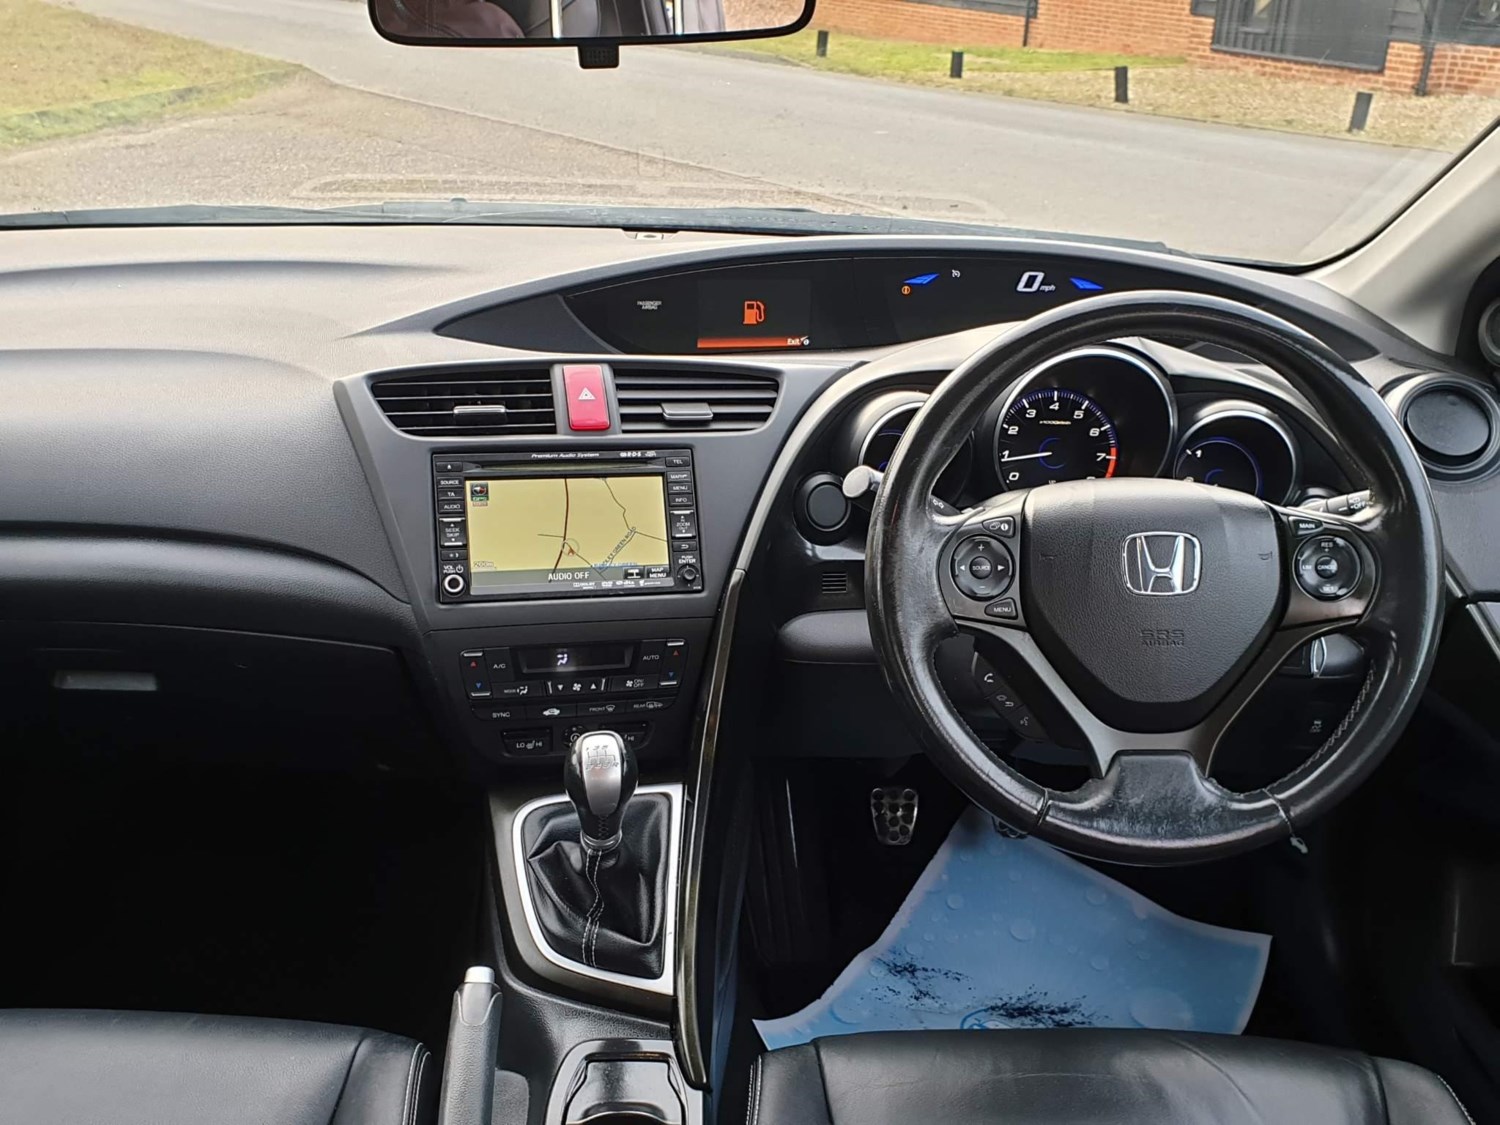 Honda Civic Listing Image